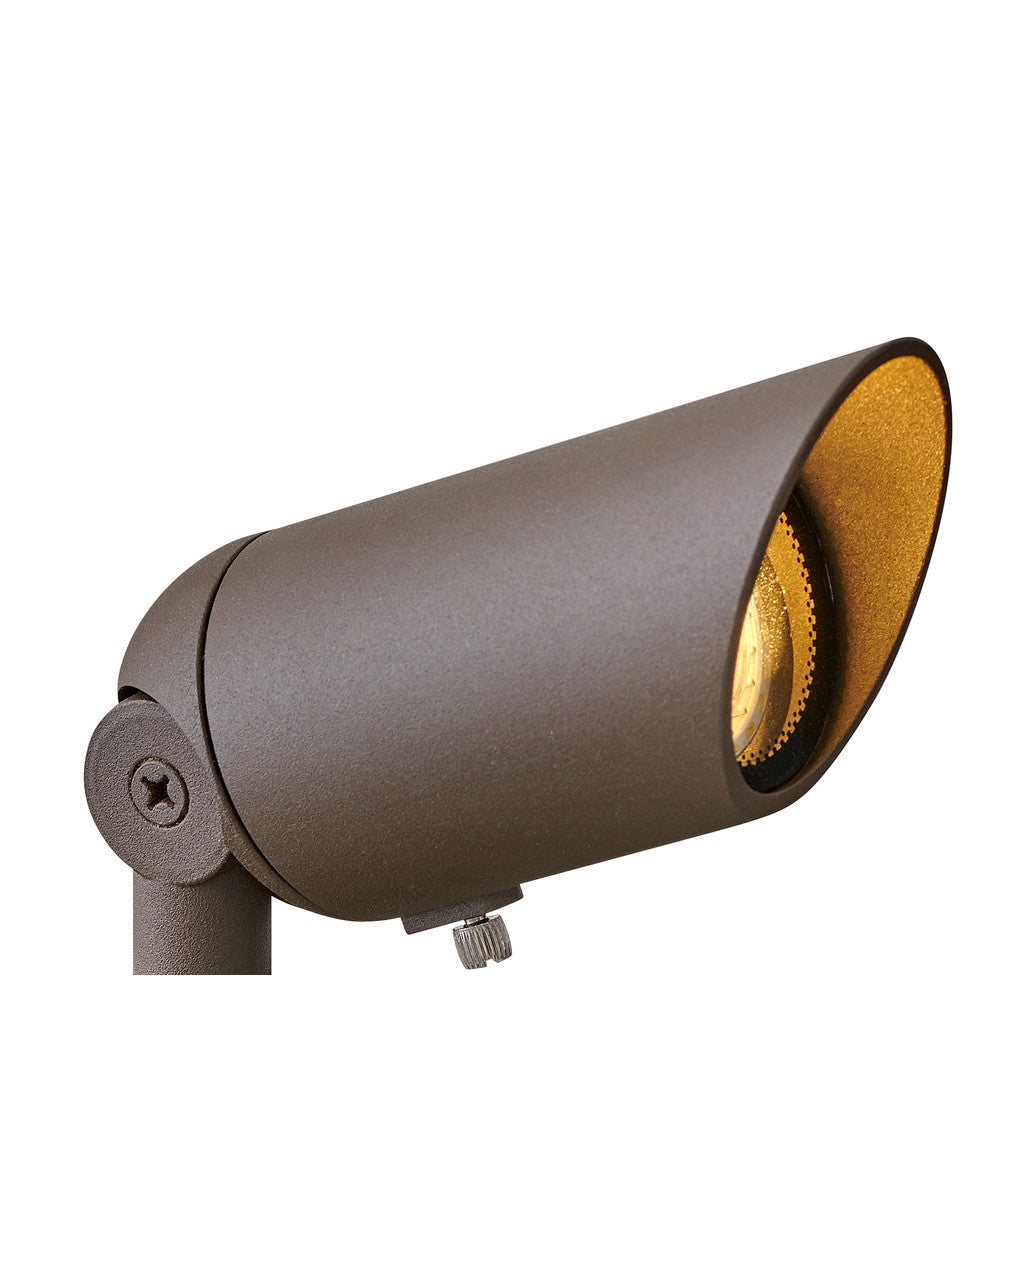 Hinkley - 1536TXB-LMA27K - LED Spot Light - Lumacore Accent Spot Light - Textured Brown